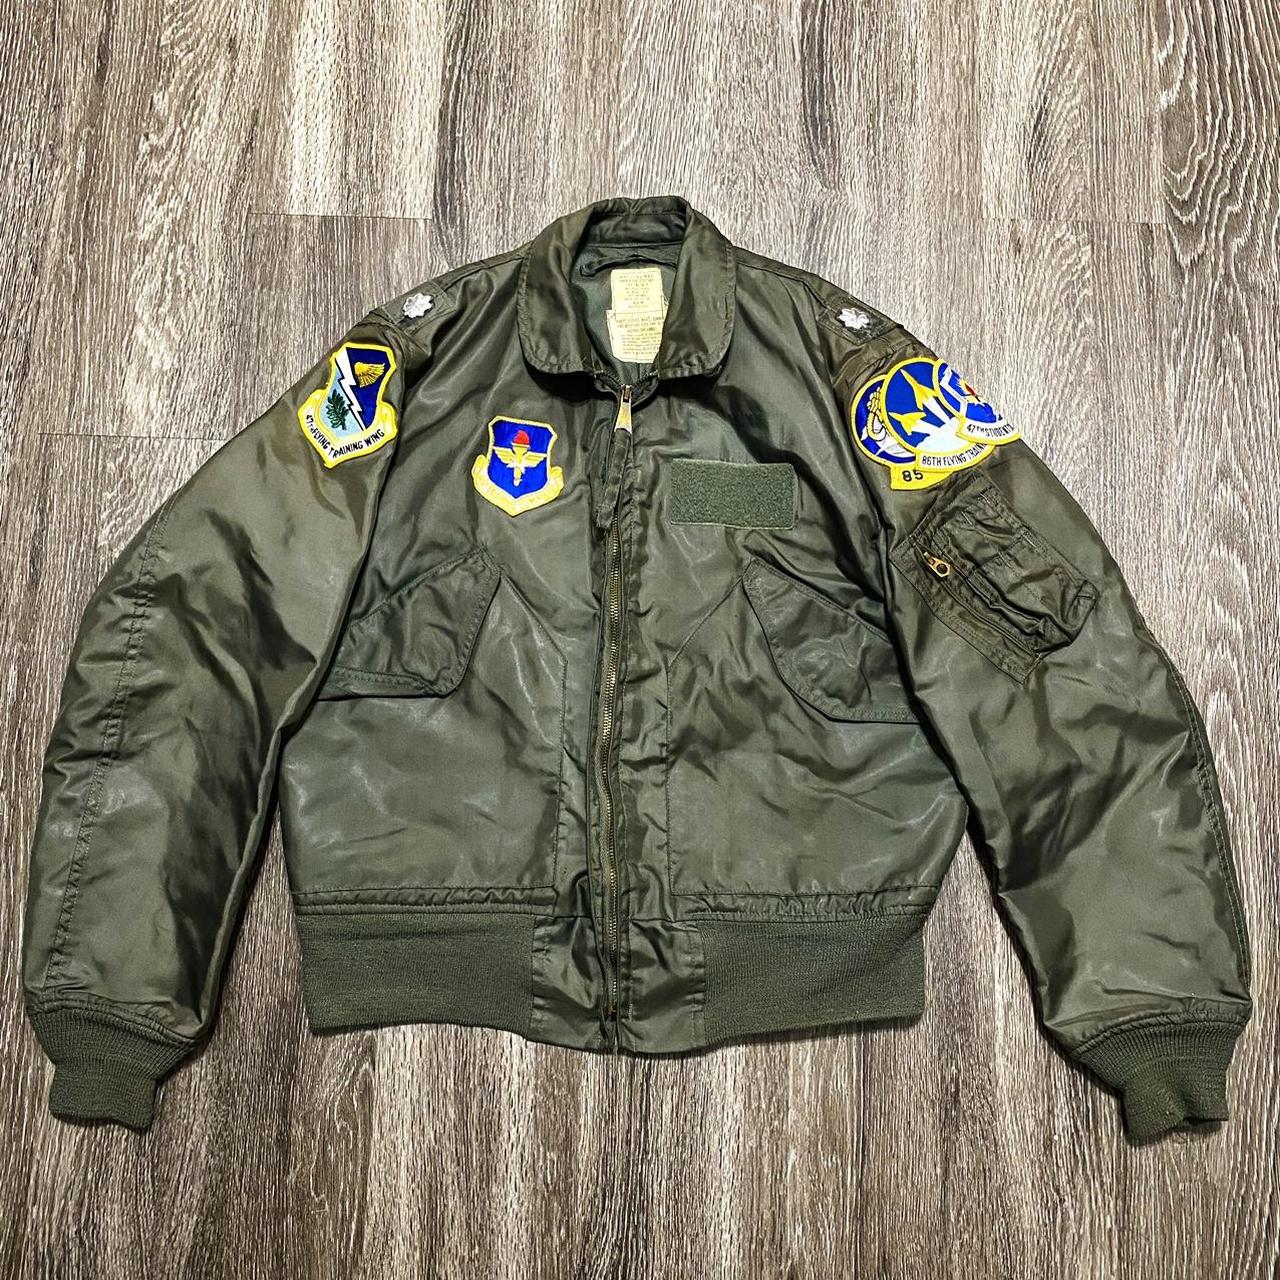 Vintage 80’s Military Flight Jacket Love the dark... - Depop